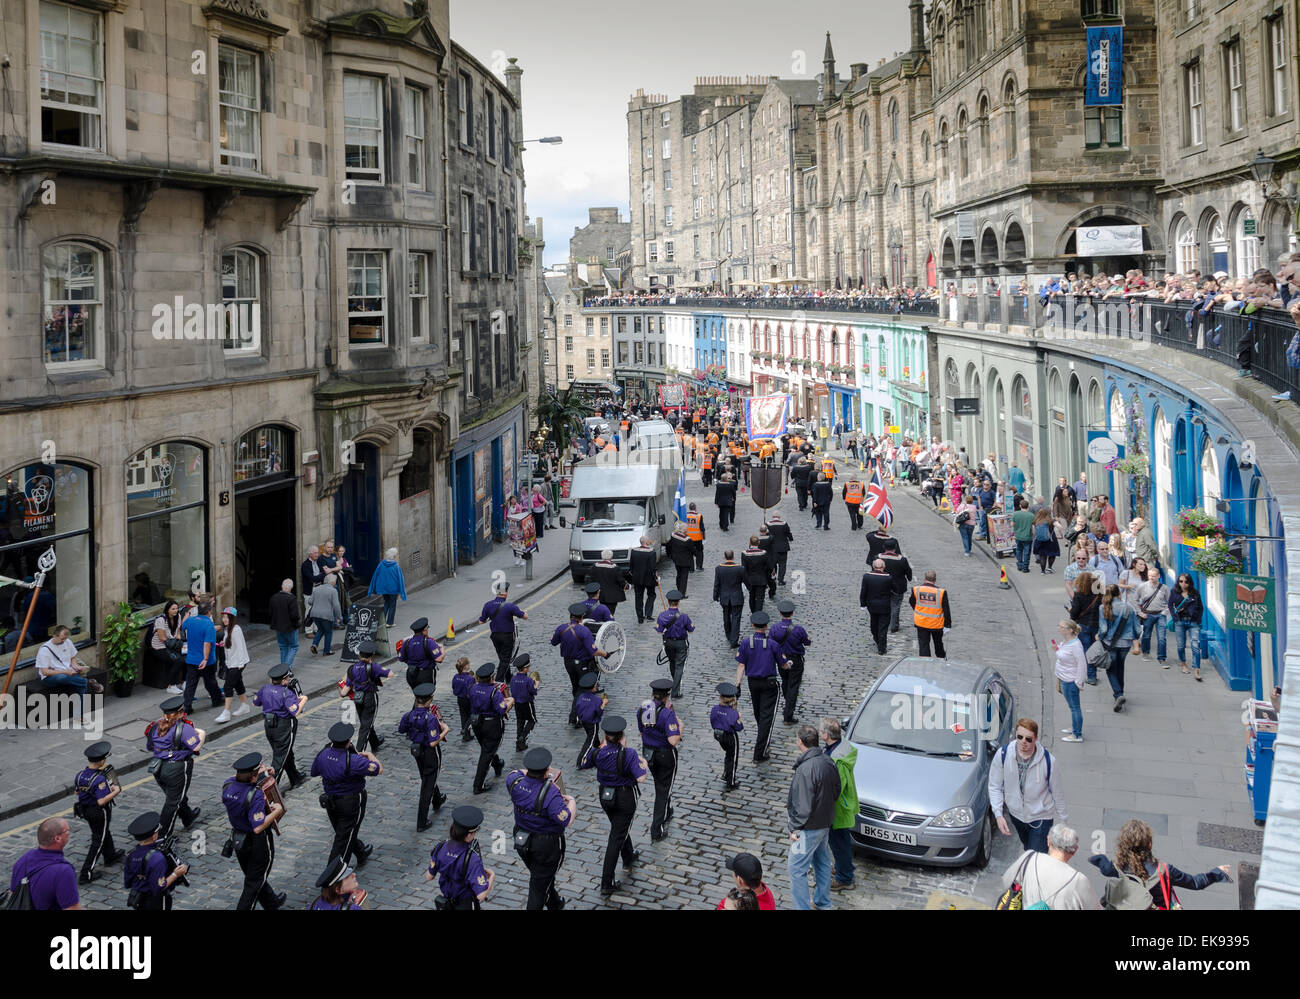 The Orange Order Parade in Edinburgh, Scotland. Stock Photo